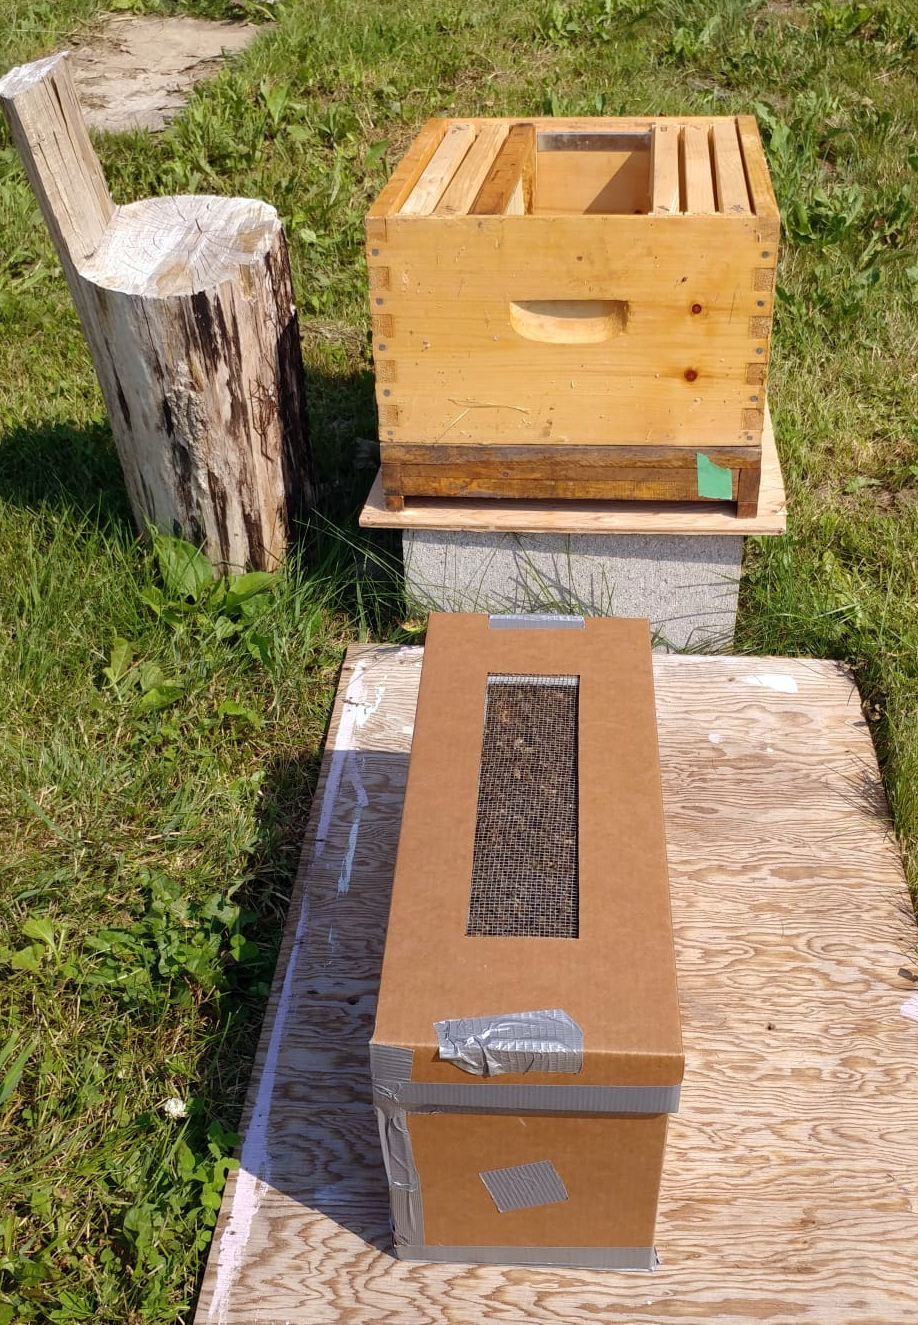 New hive in cardboard box